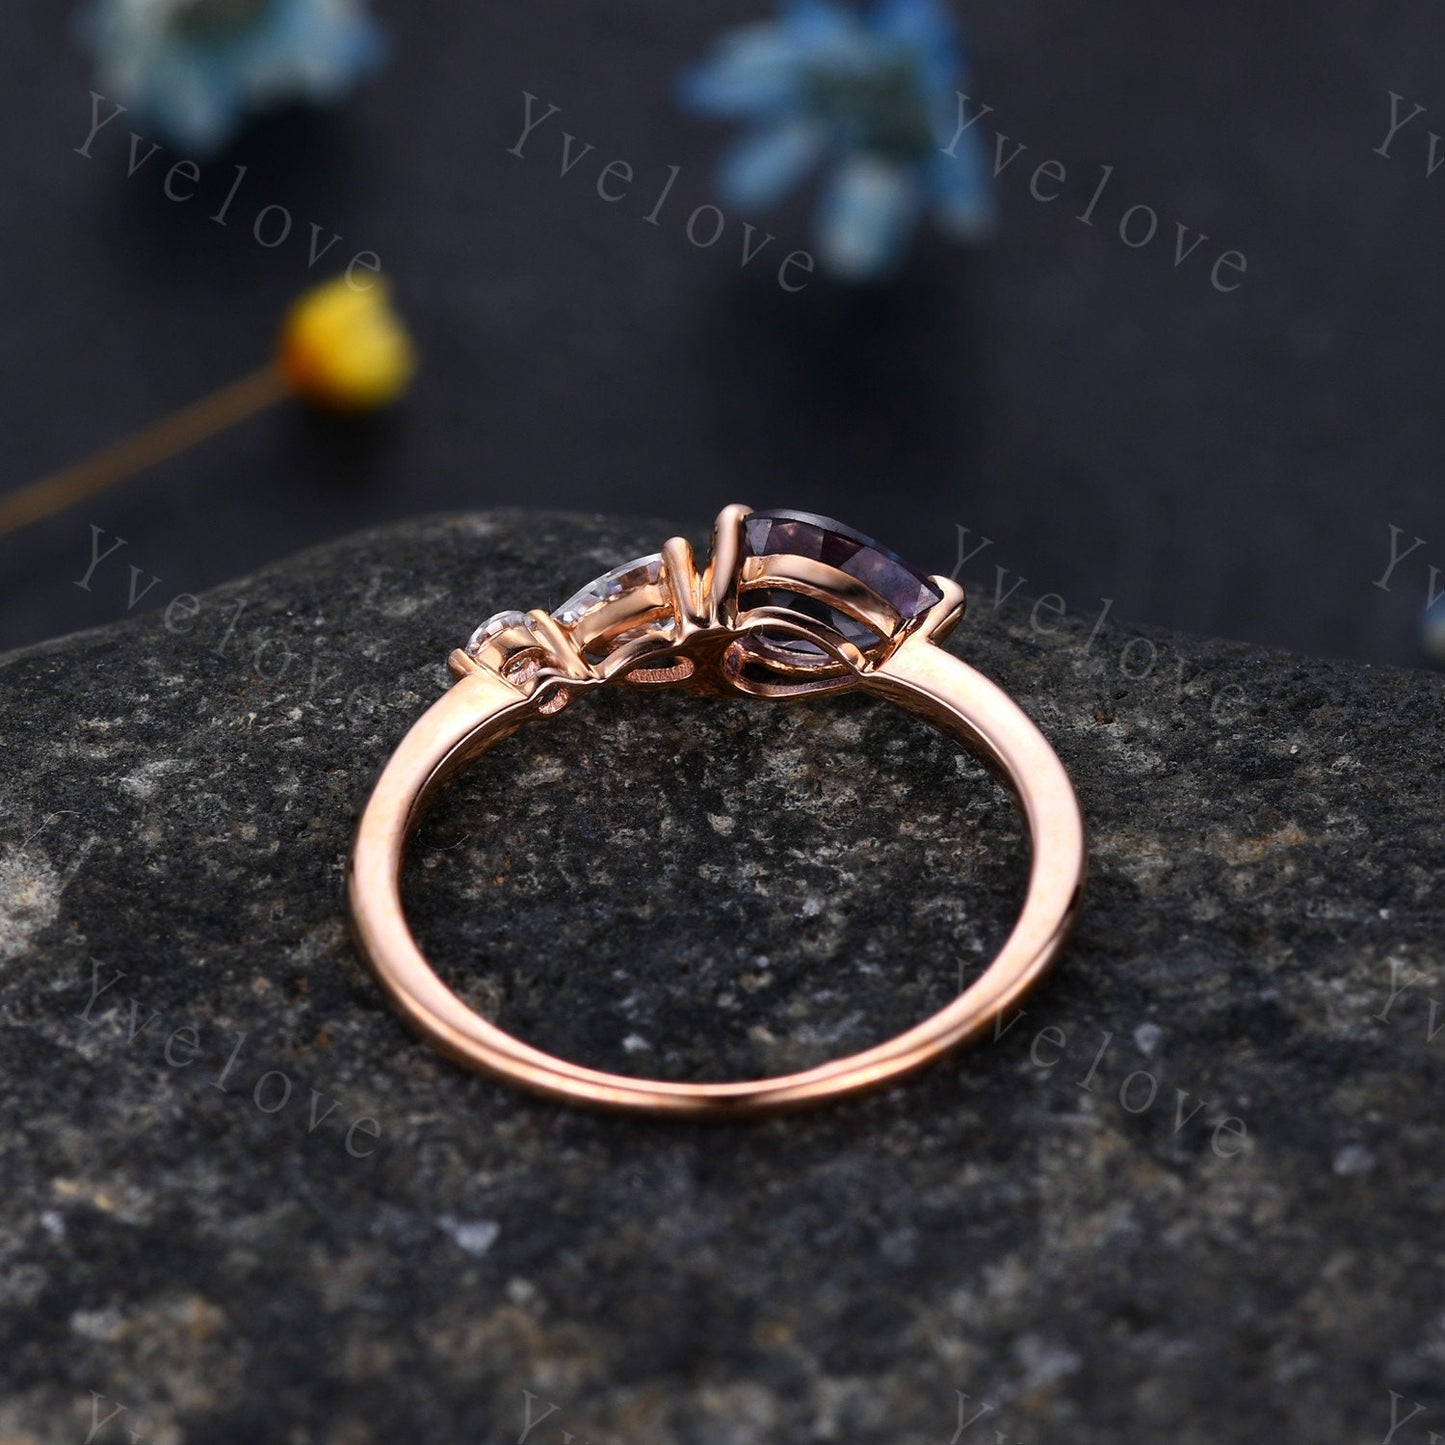 Vintage Black Onyx Engagement Ring,Pear Cut Gems,Art Deco Moissanite Wedding Band,3 Stone Unique Women Bridal Promise Ring Gift,Gold Ring